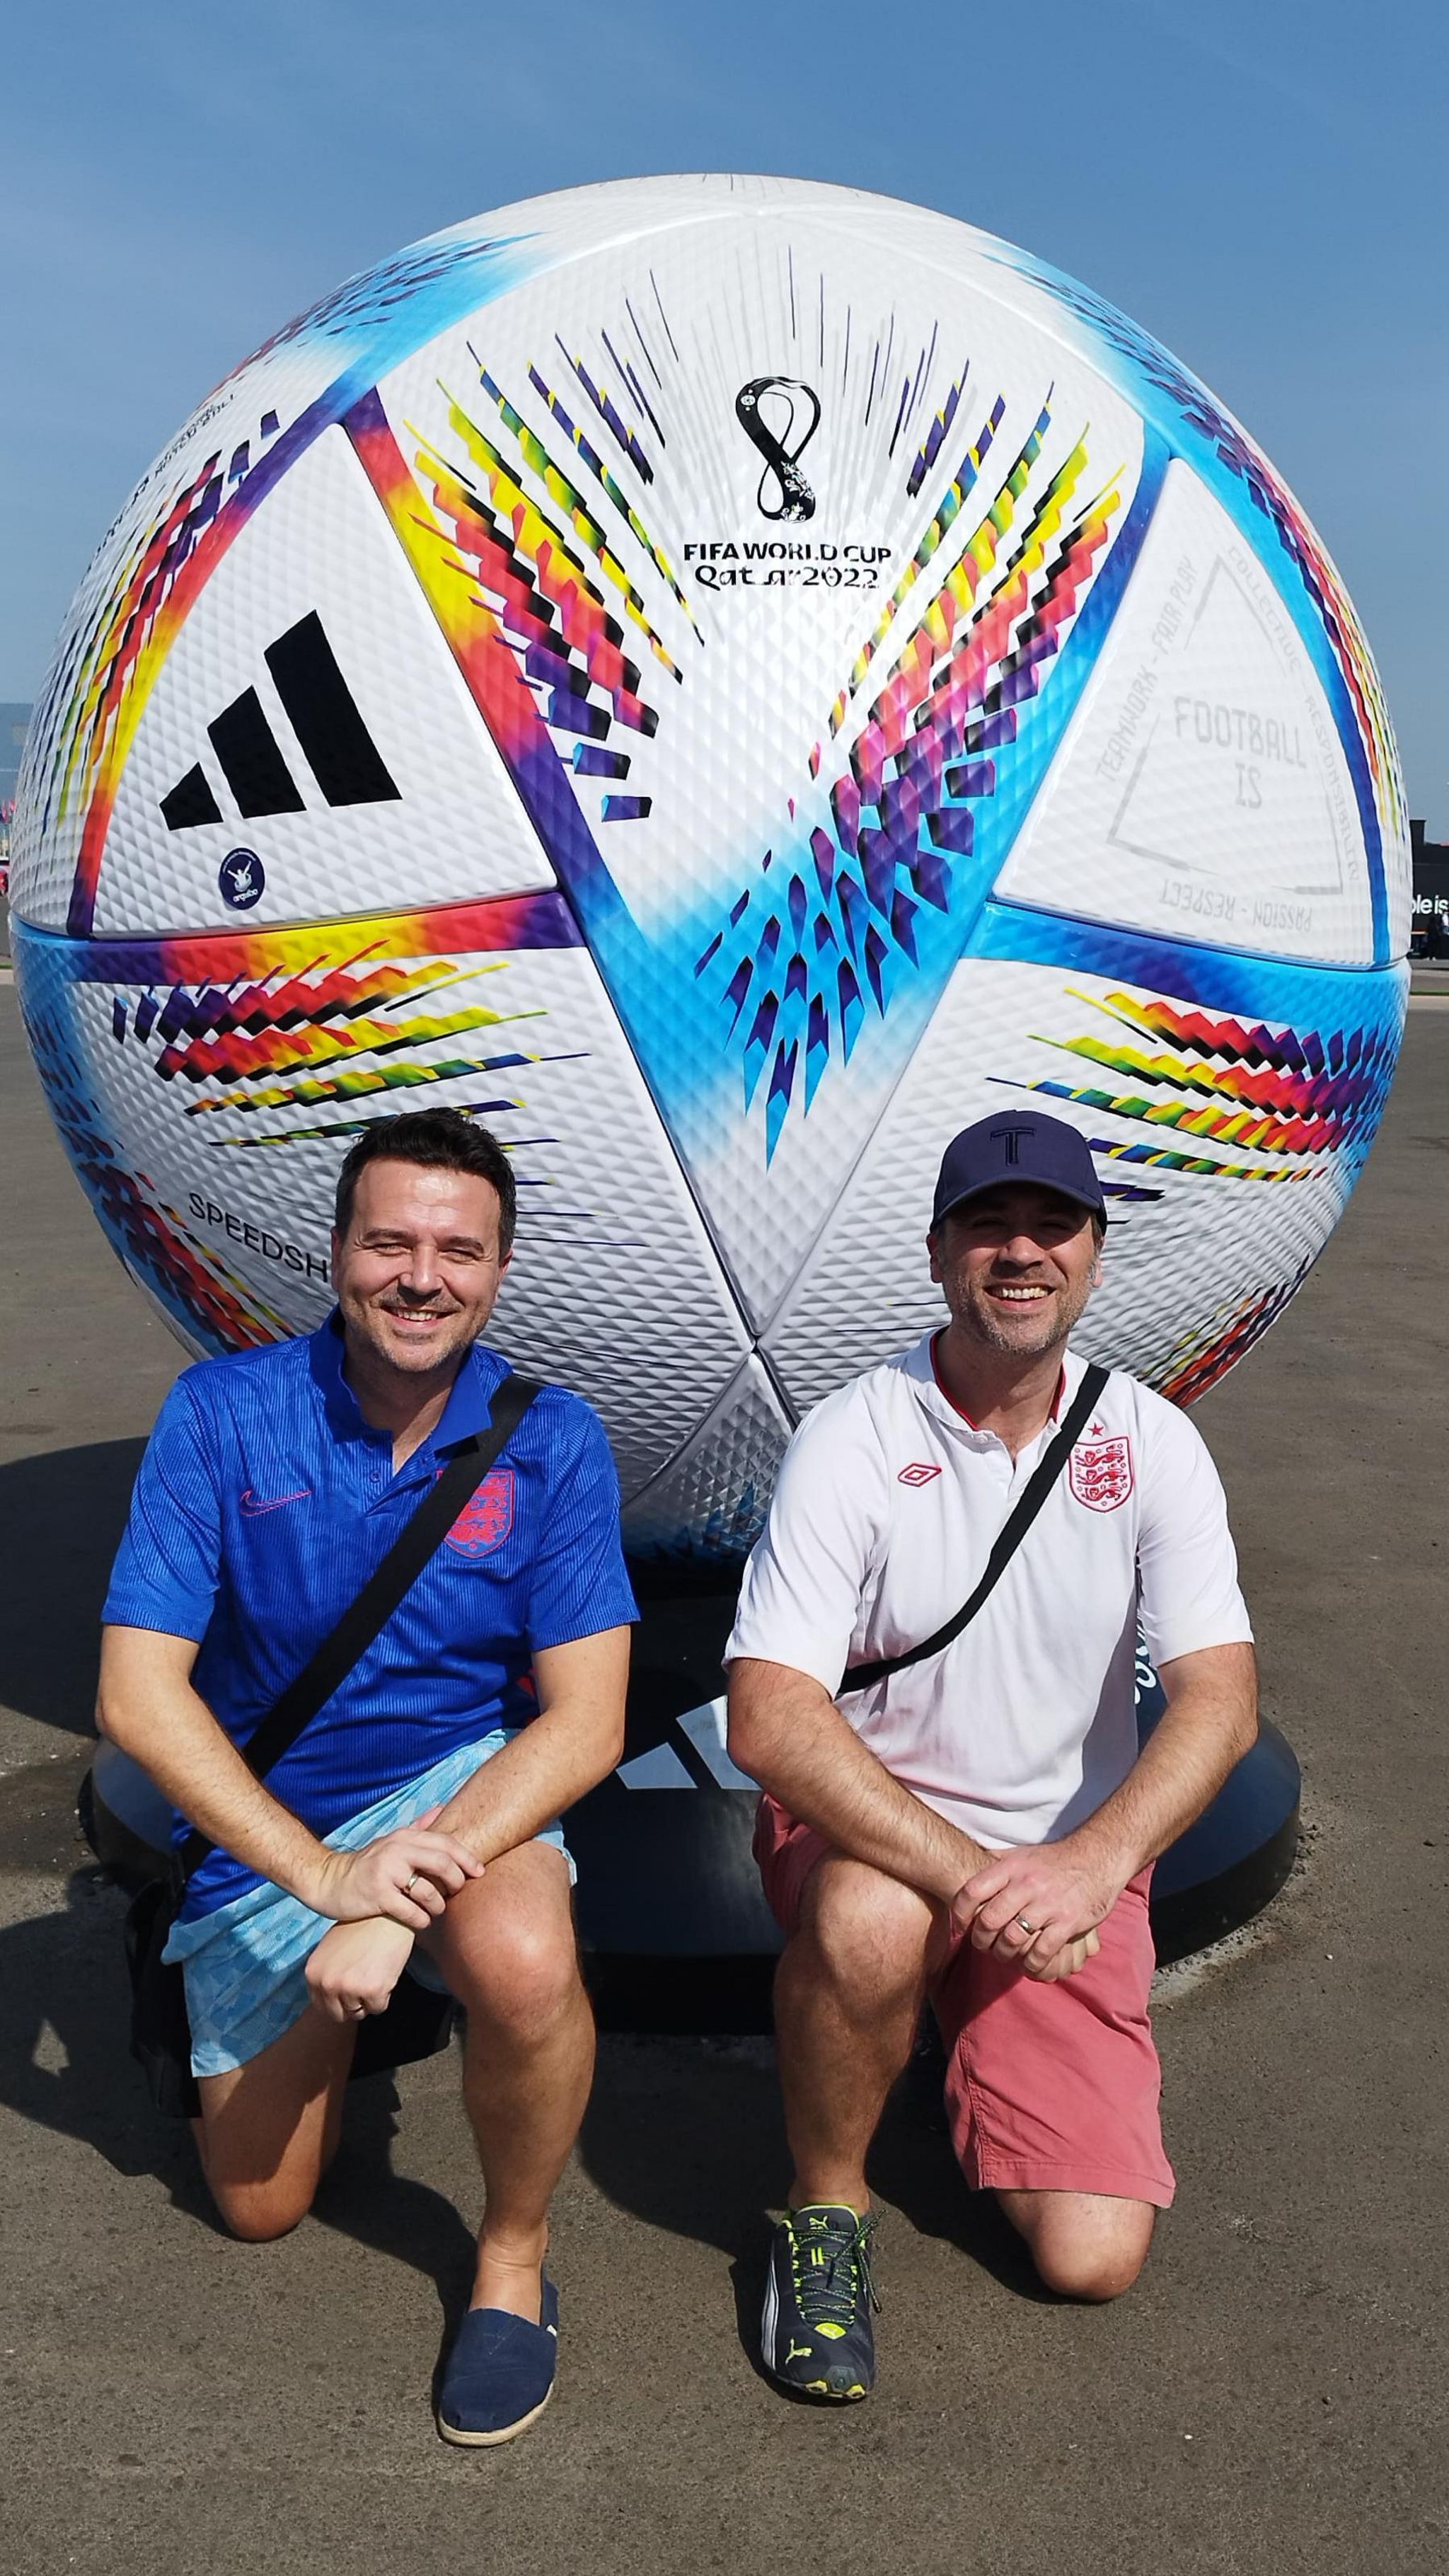 Lee Nash and Aaron Hacon at the Qatar World Cup 